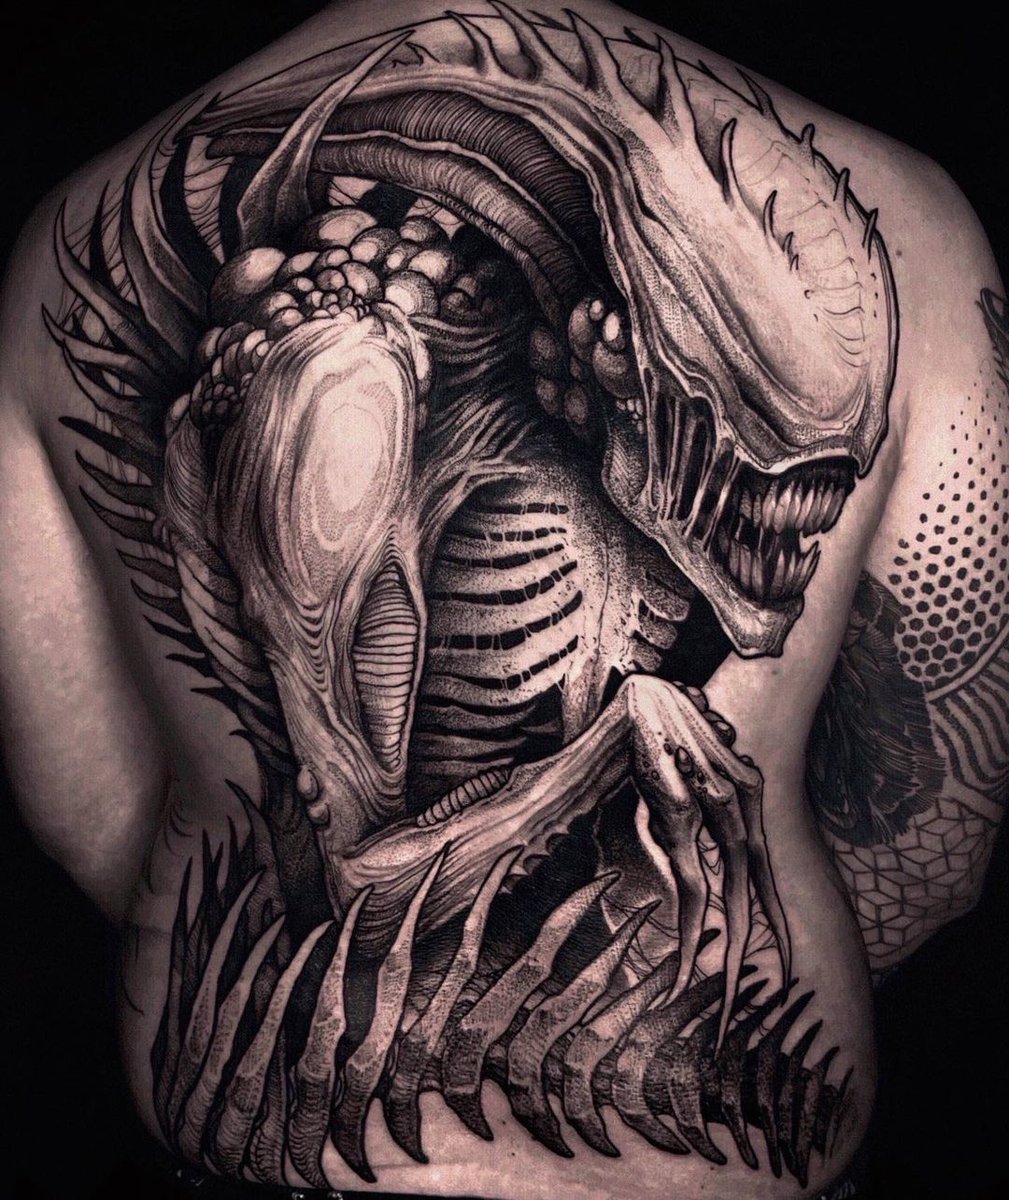 Tattoo Art Designs on X: "Xenomorph... ☆Tattoo Art By Tessa Von ☆ Location: Gent, Belgium ☆Instagram:@tessa.von More Tattoo Art On https://t.co/wtOiAvVwlt https://t.co/tolM1rxG3V" / X